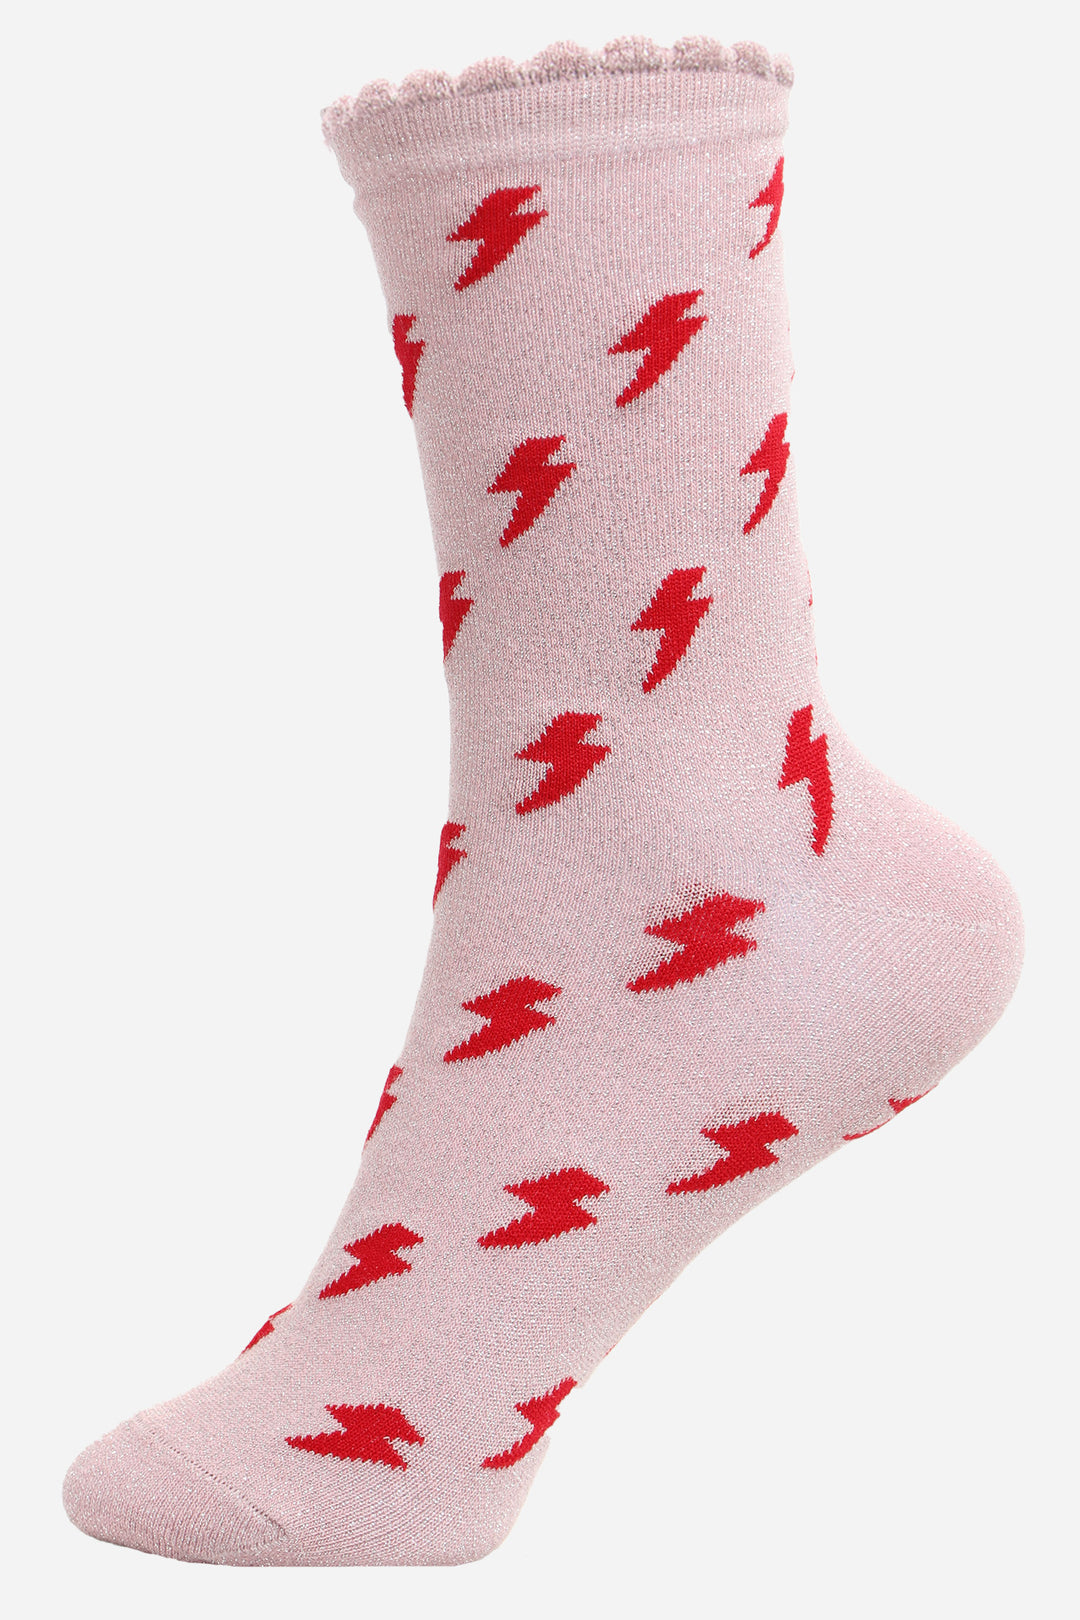 Light Pink Red Lightning Bolt Glitter Socks with Scalloped Cuffs